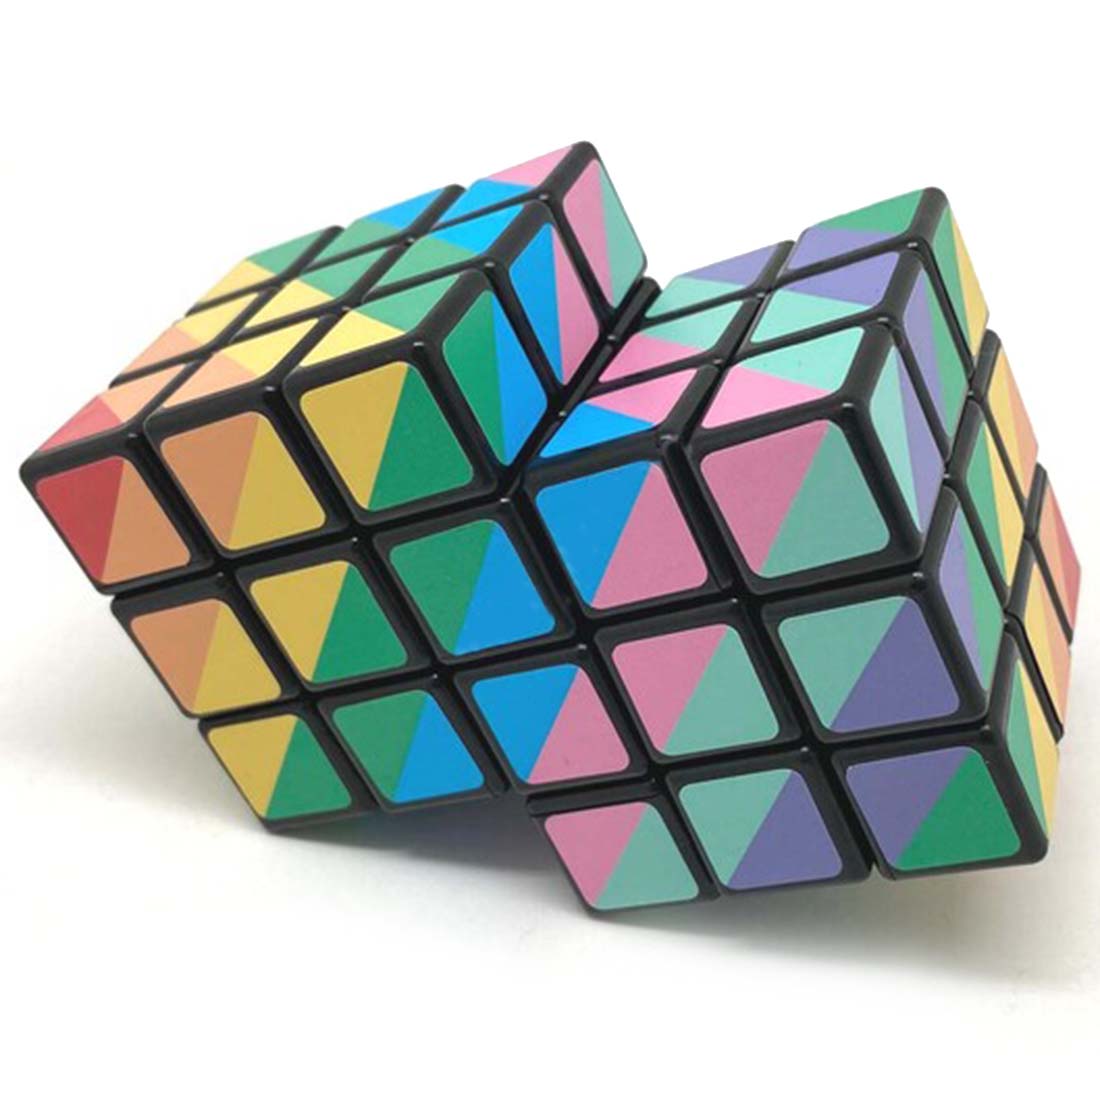 Calvin's 3x3 Double Rainbow Speed Cube